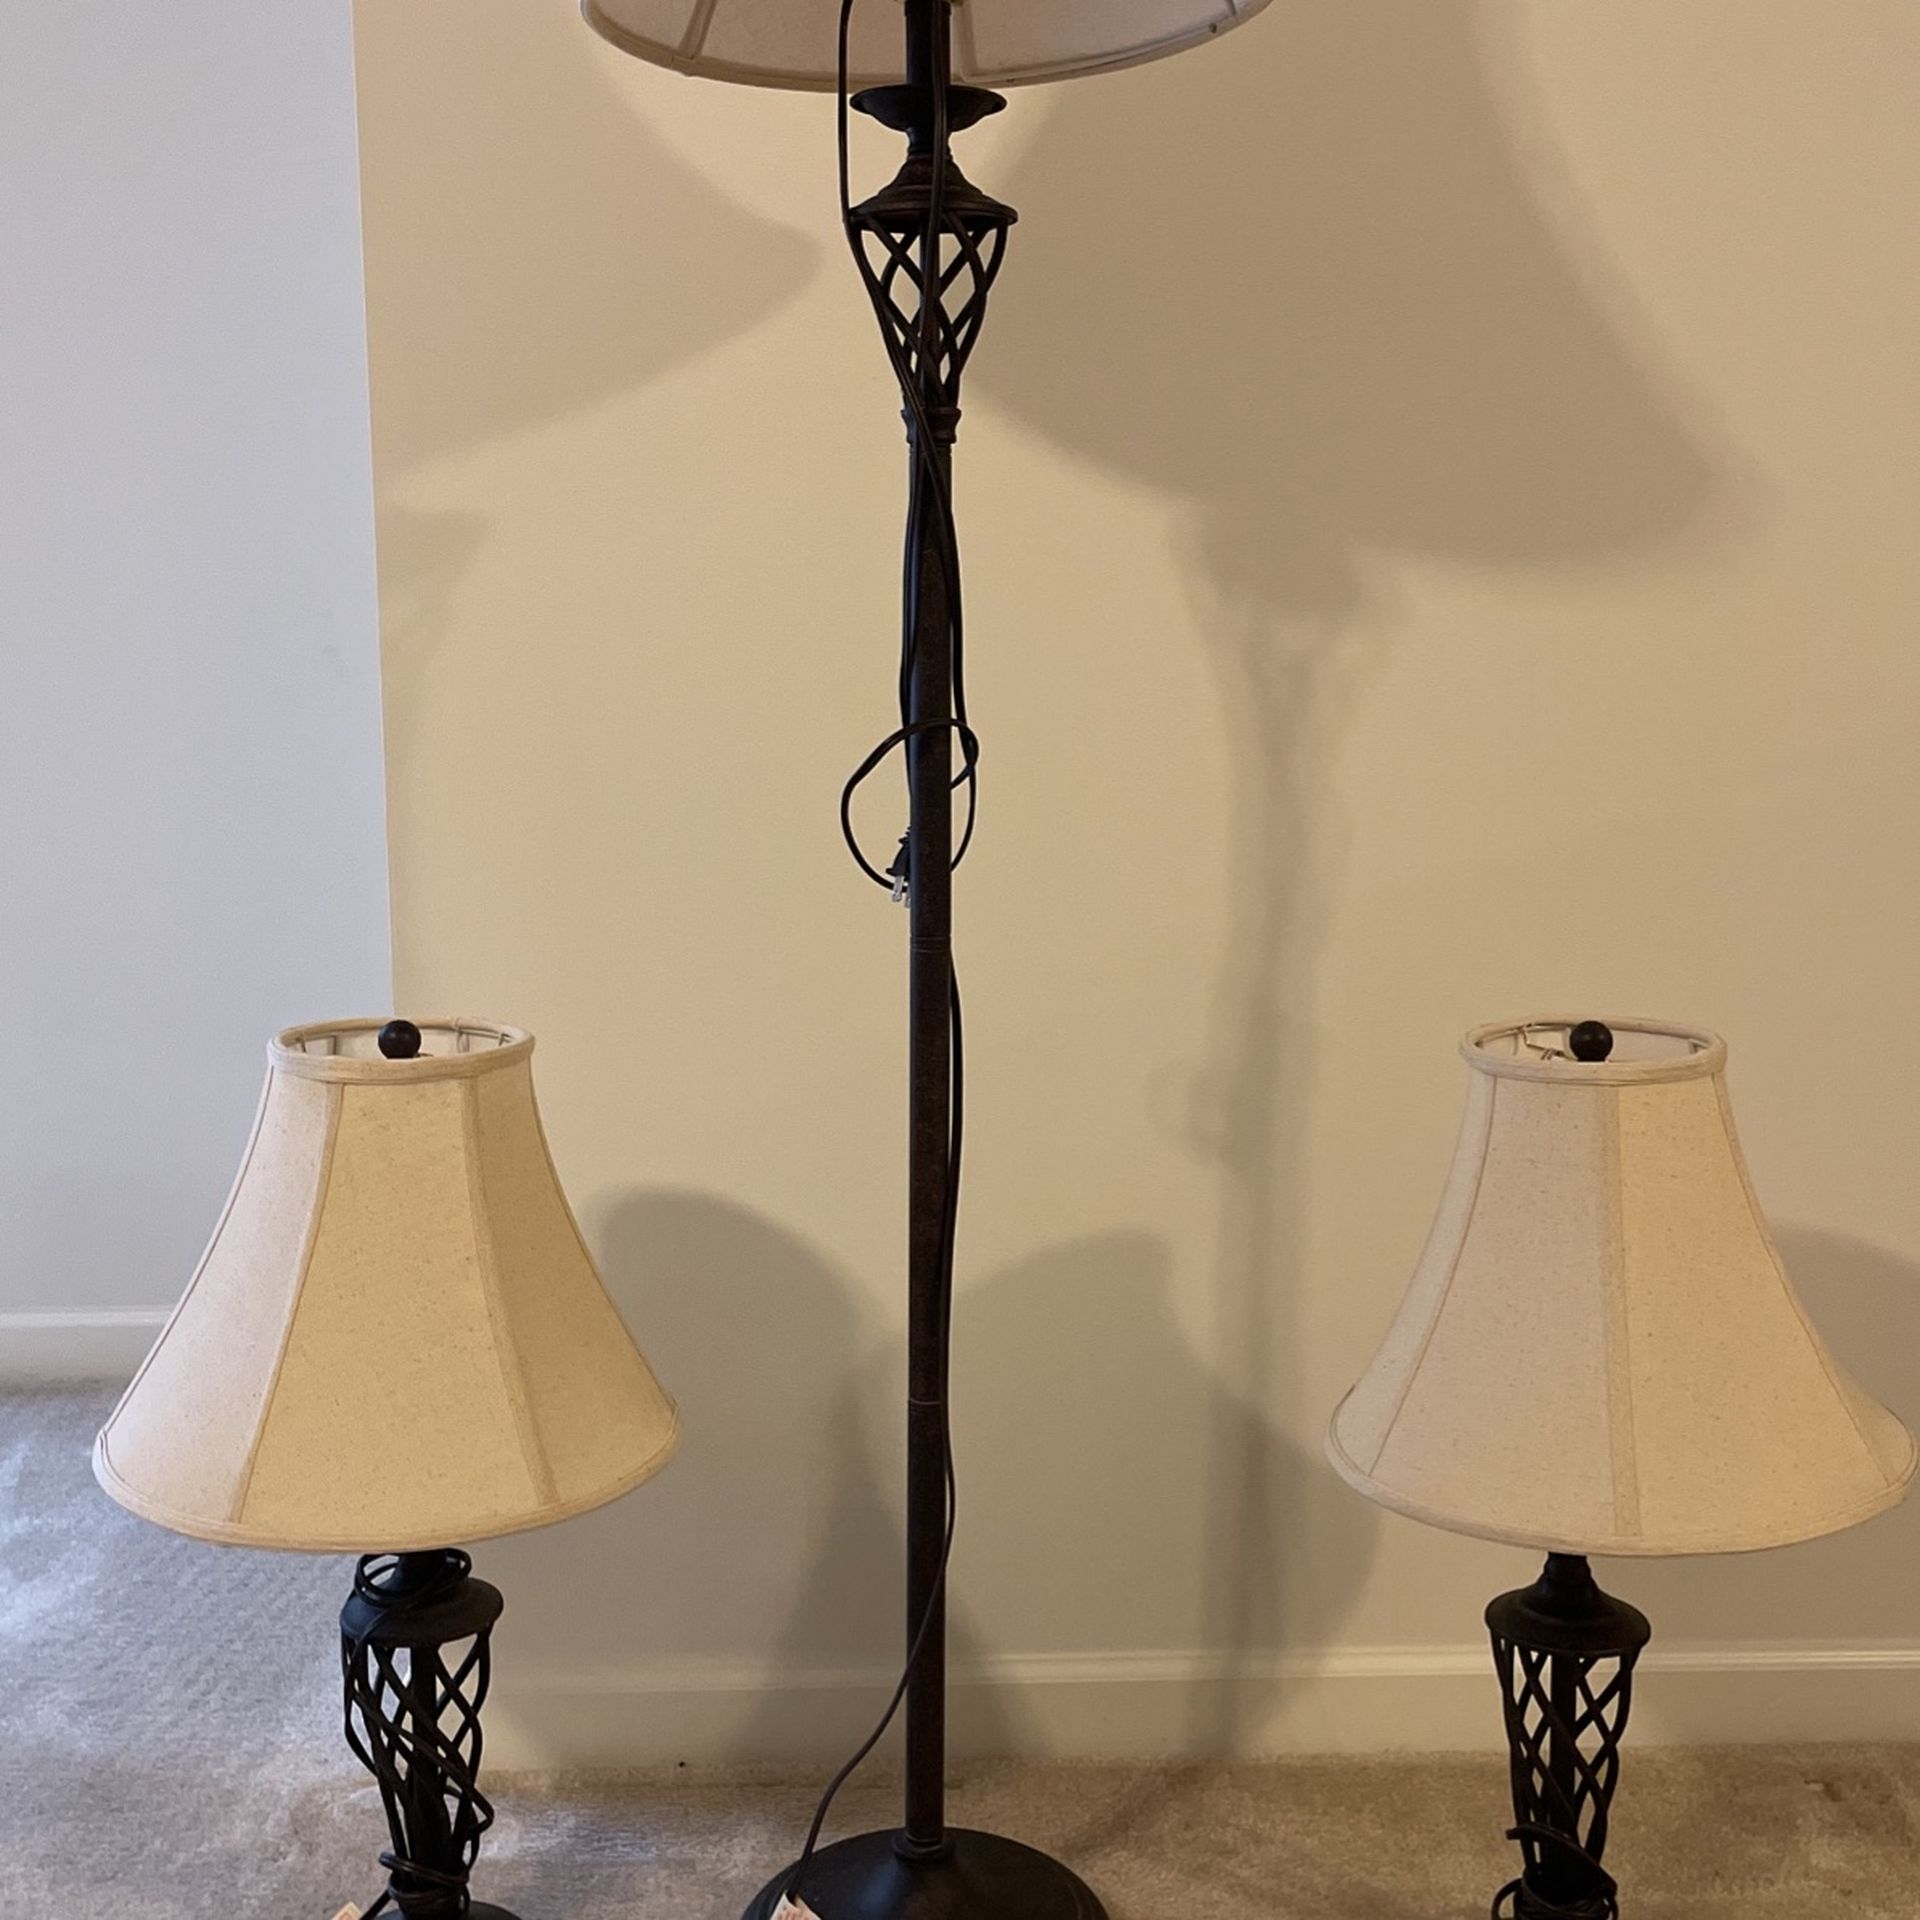 Three dark brown antique metal lamps a great conversation piece will accept best offer